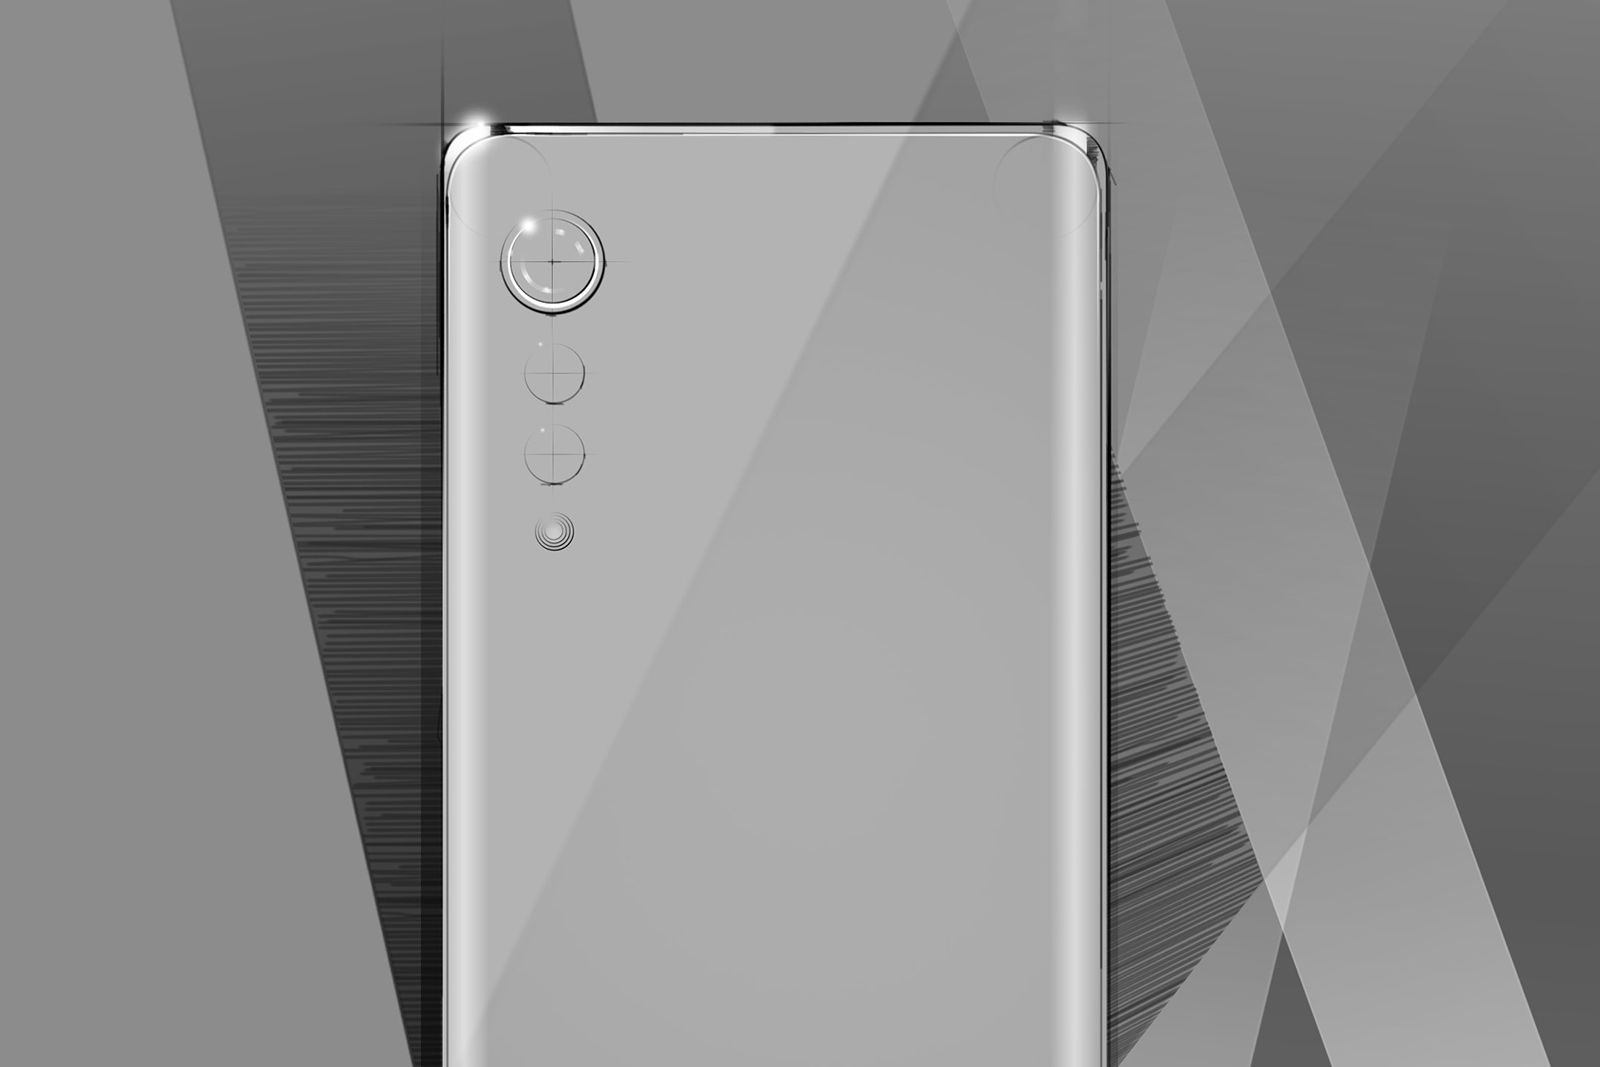 LG teases minimalist design for new smartphone image 2